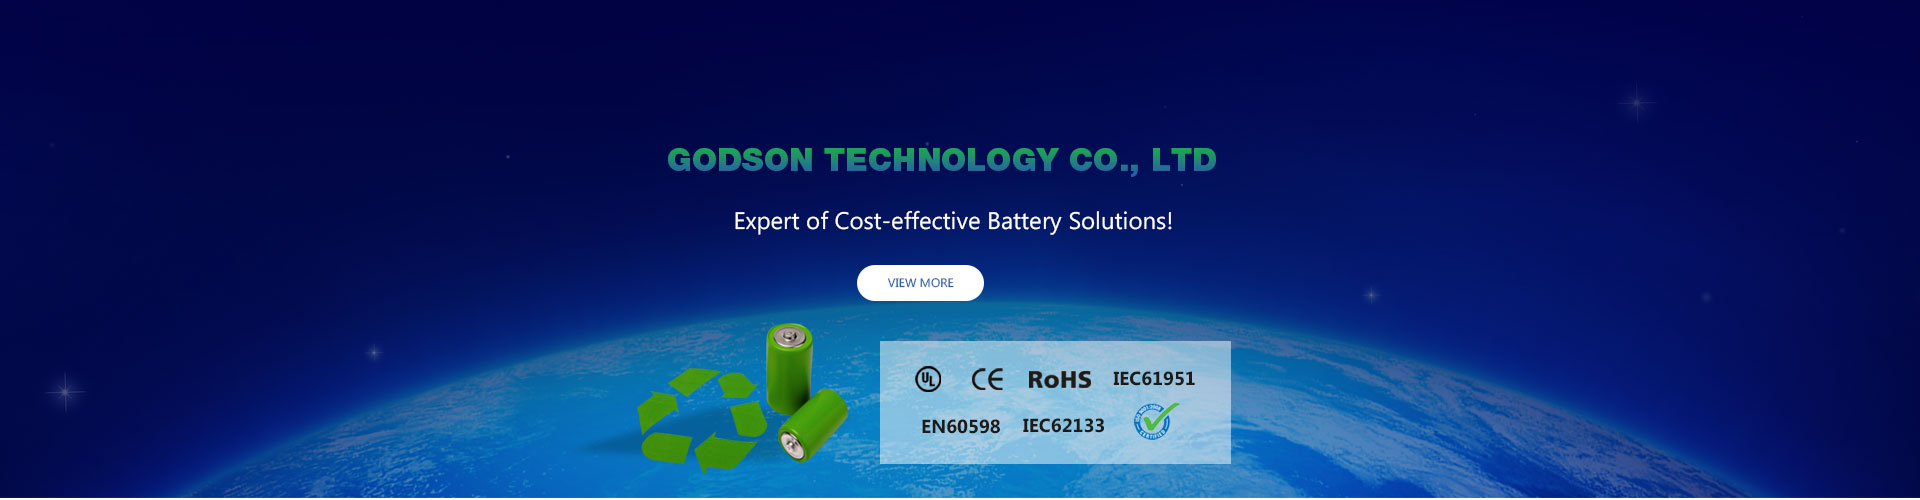 Godson Technology Co., Ltd.